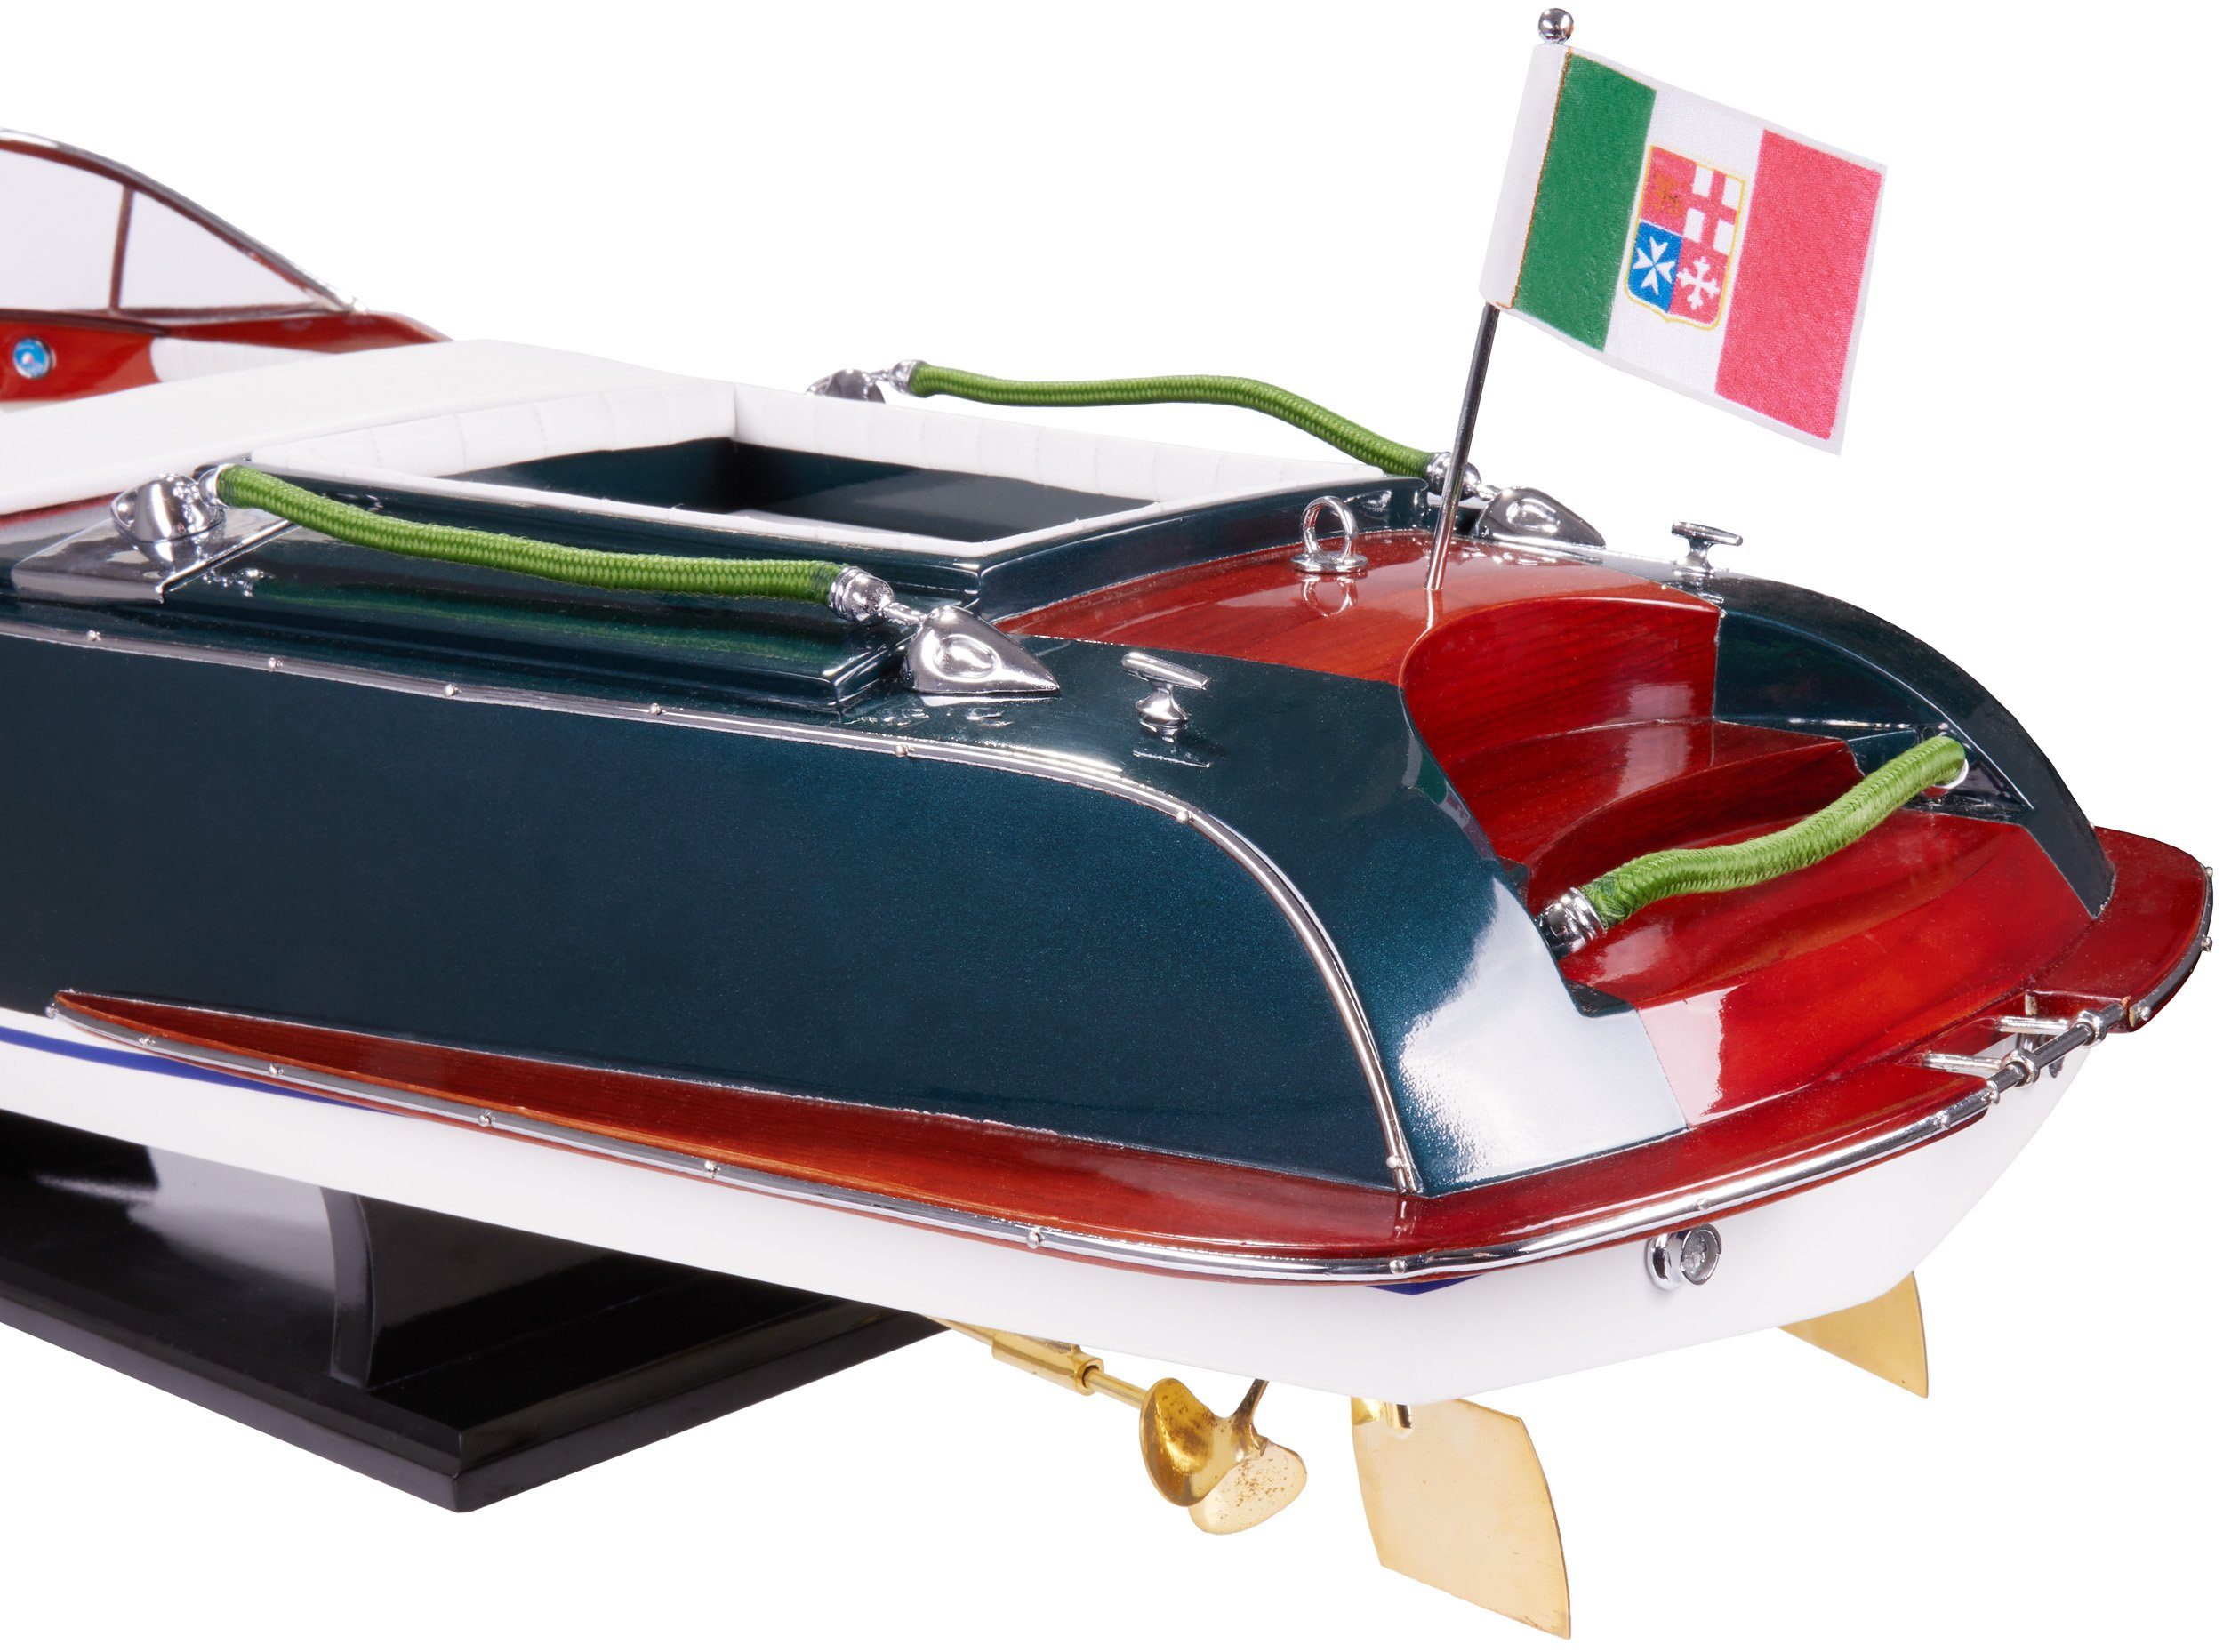 26 cm x 1:11, (1 Aquariva 88 im x 27 Luxus Italienisches Riva St), BRUBAKER Boot Dekoobjekt Handwerksarbeit Maßstab mit Dekoration Luxusboot, Zertifikat, Modellboot Replika